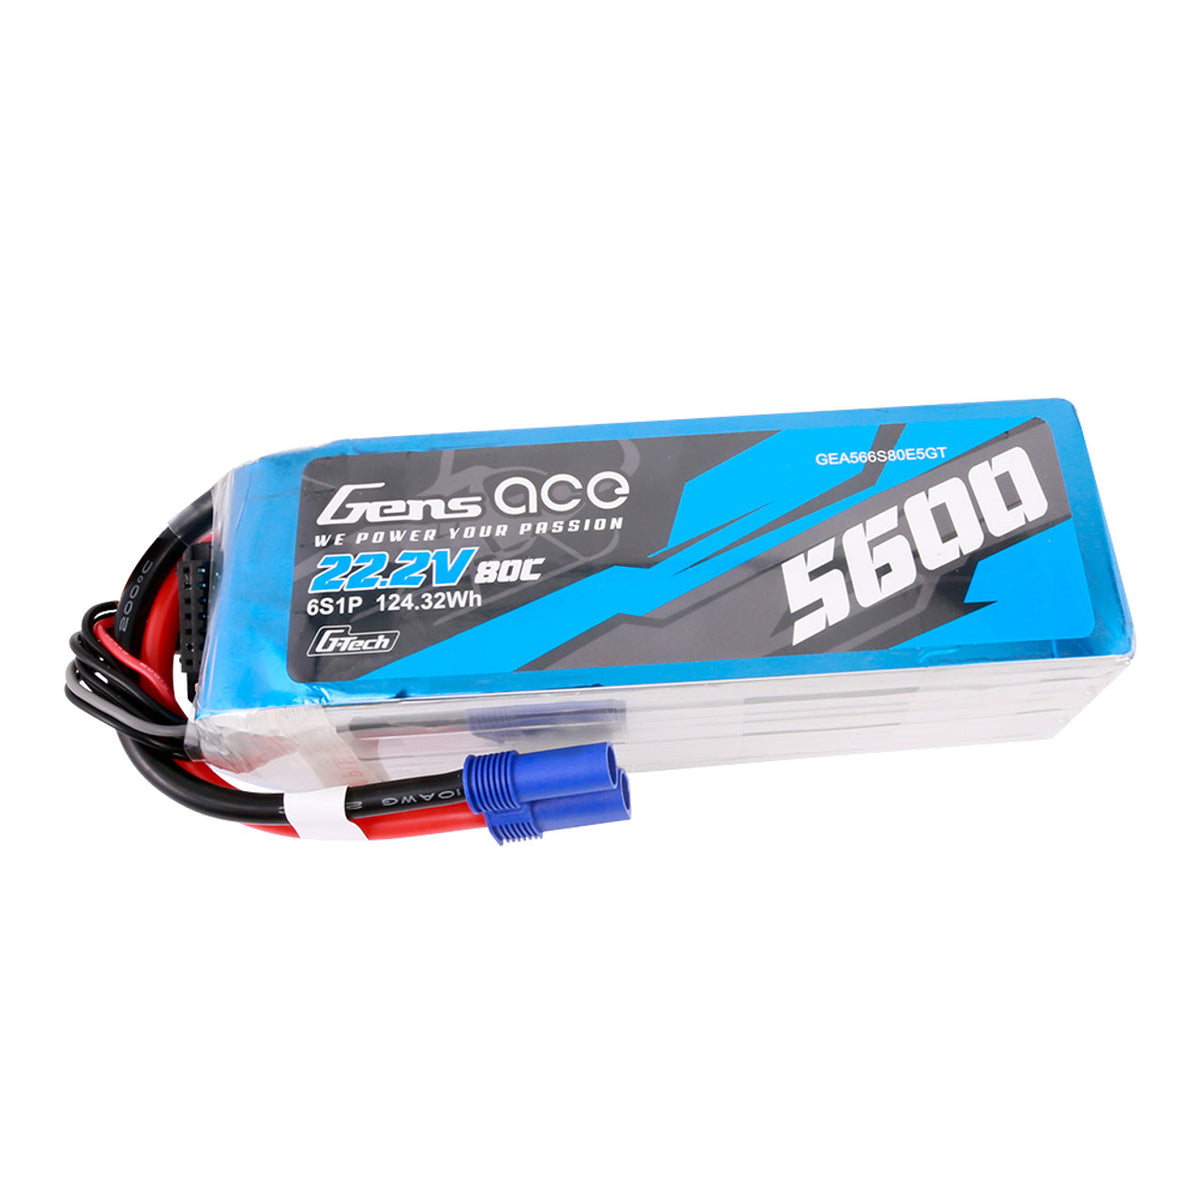 Gens ace 5600mAh 6S 80C 22.2V G-tech Lipo Battery Pack with EC5 Plug